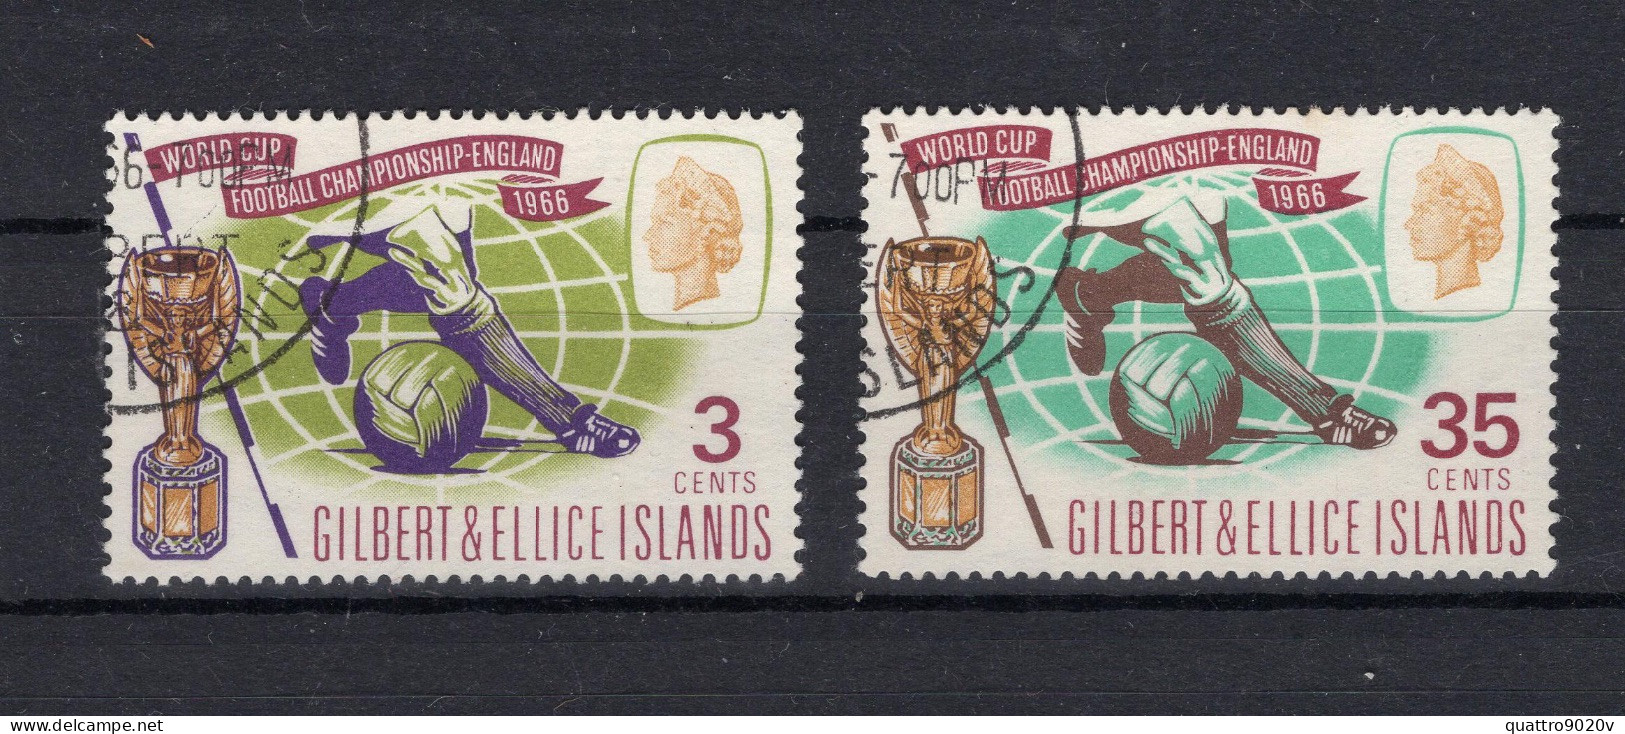 1966. World Cup Football Championship. Used (o) - Gilbert & Ellice Islands (...-1979)